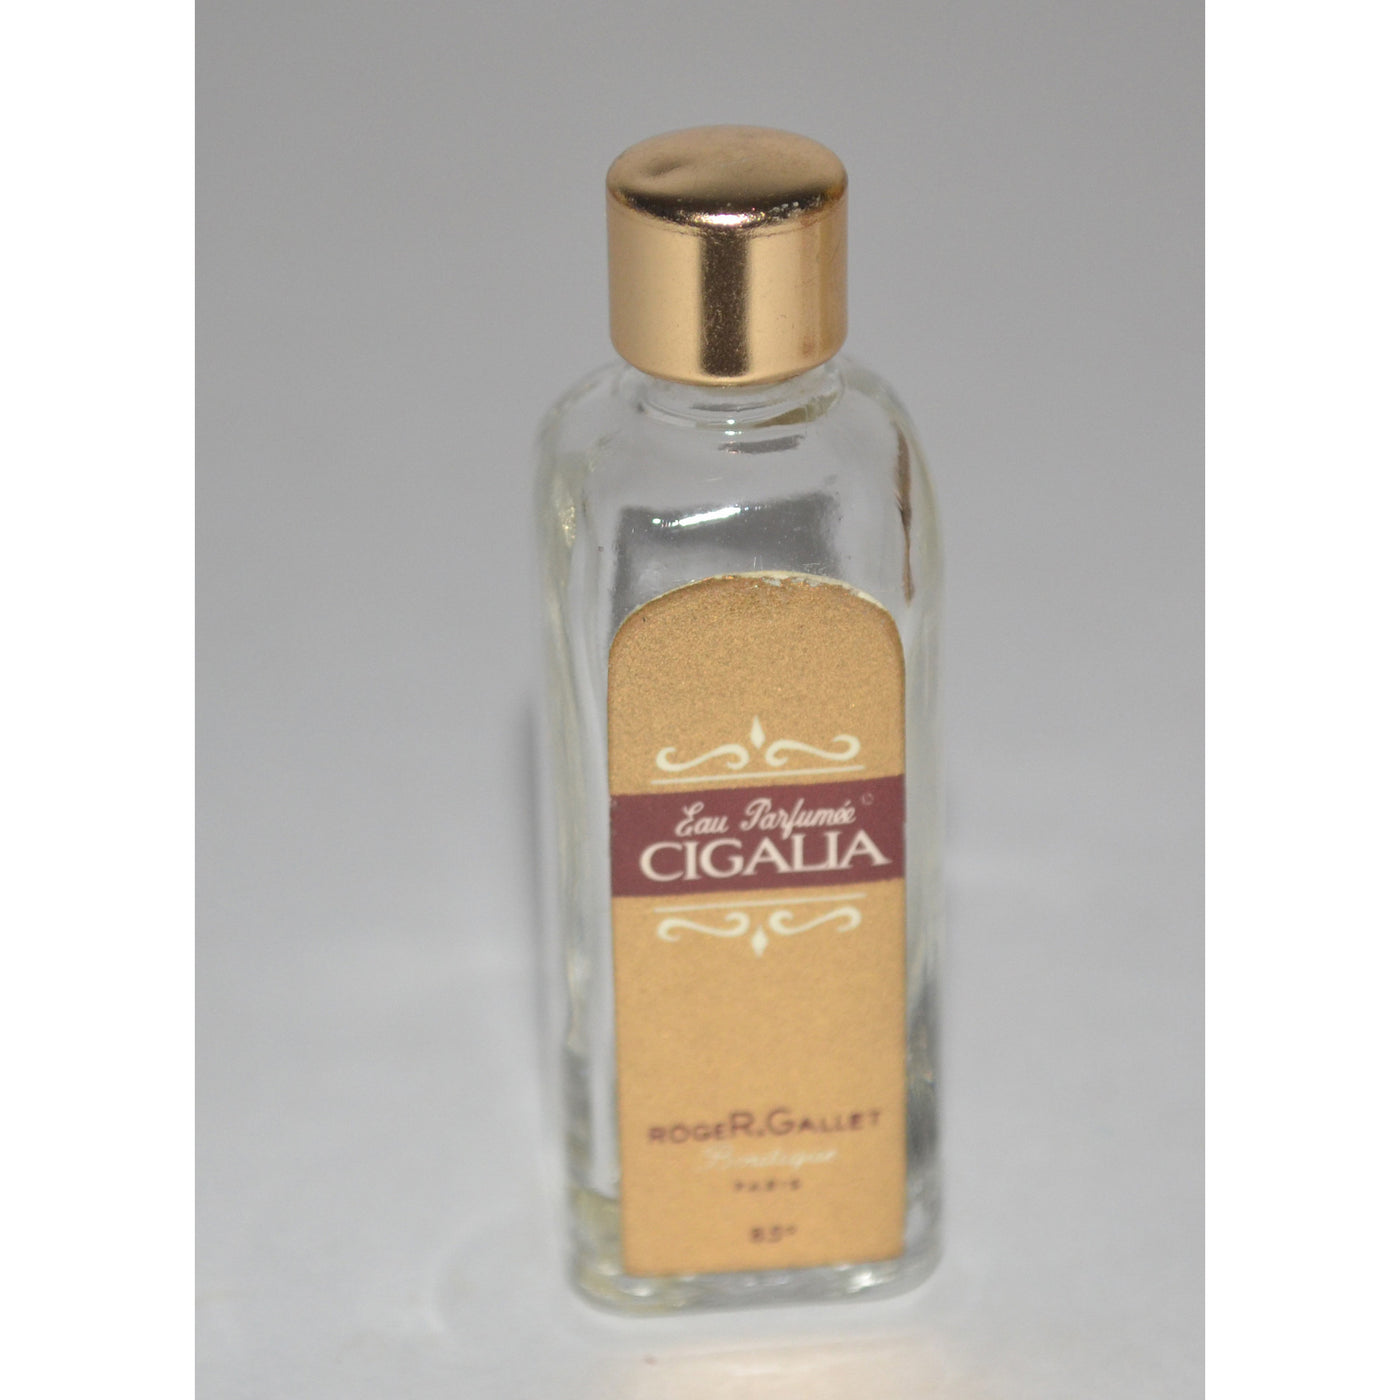 Vintage Cigalia Eau Parfume Mini By Roger & Gallet 